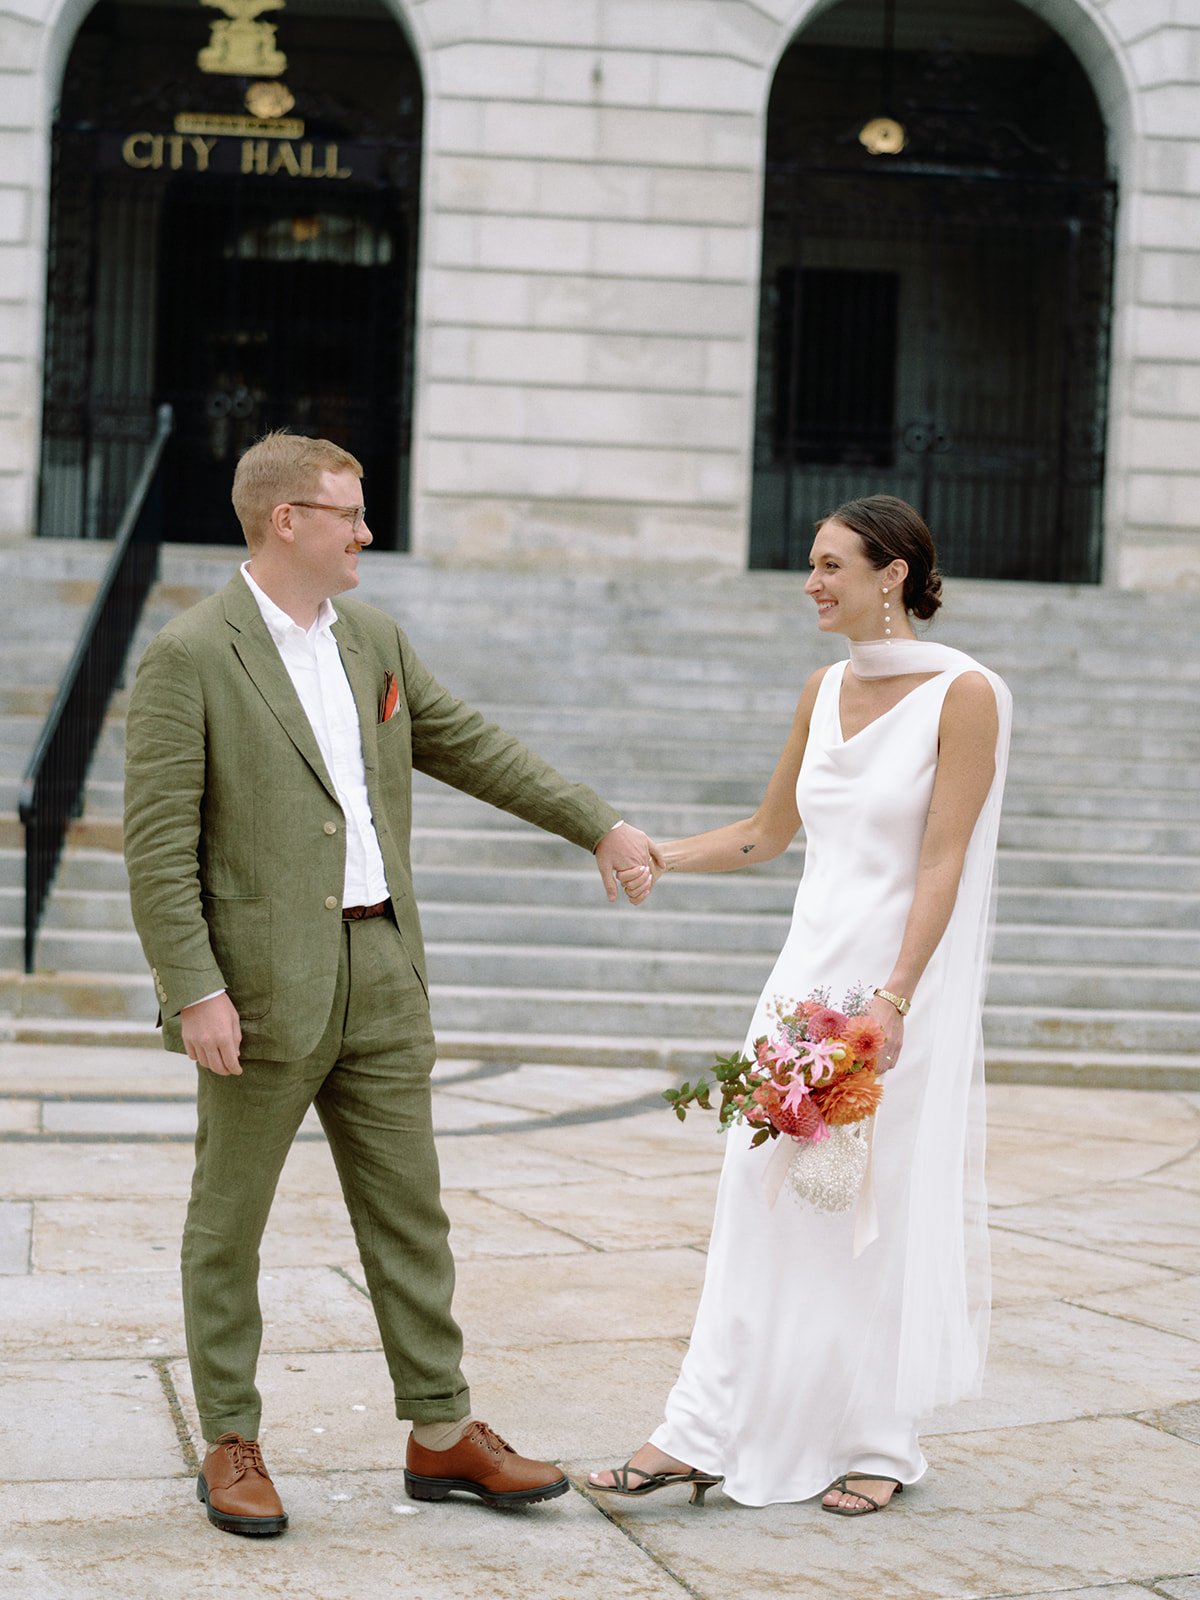 Best-Film-35mm-Austin-Wedding-Photographer-Portland-Maine-City-Hall-Super8-104.jpg